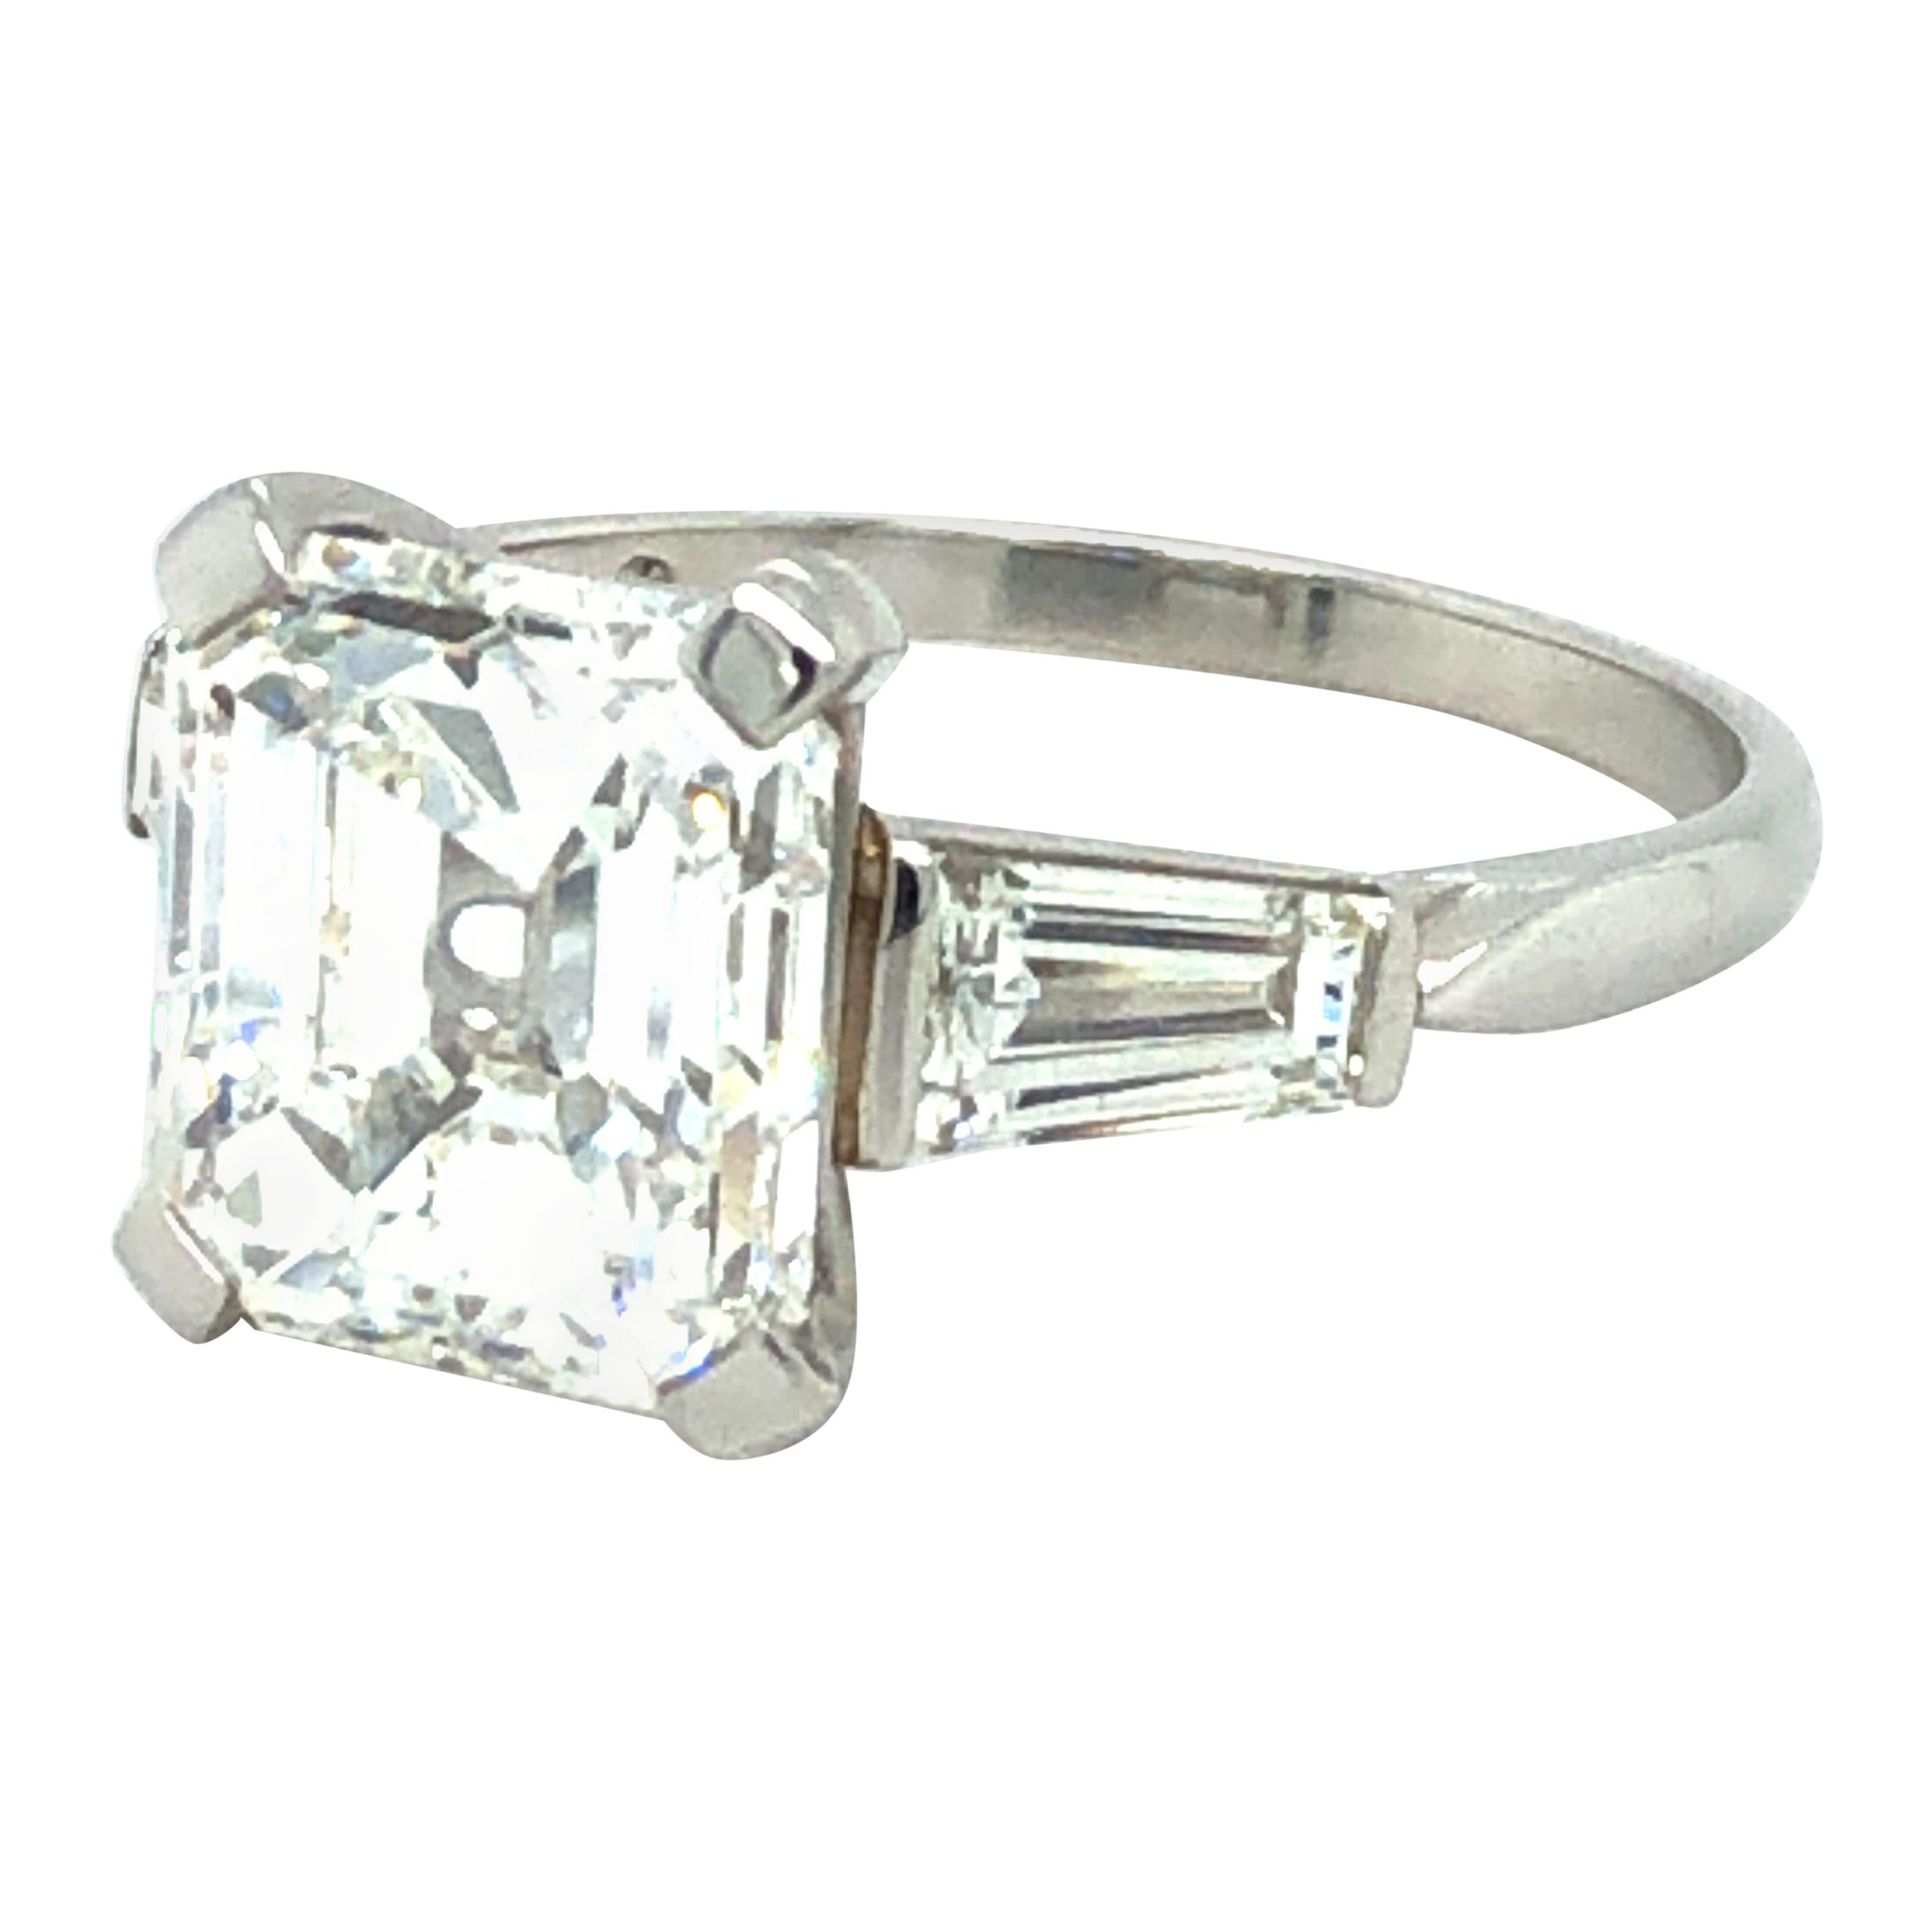 GIA Certified 4.19 Carat Emerald Cut Diamond Ring in Platinum 950